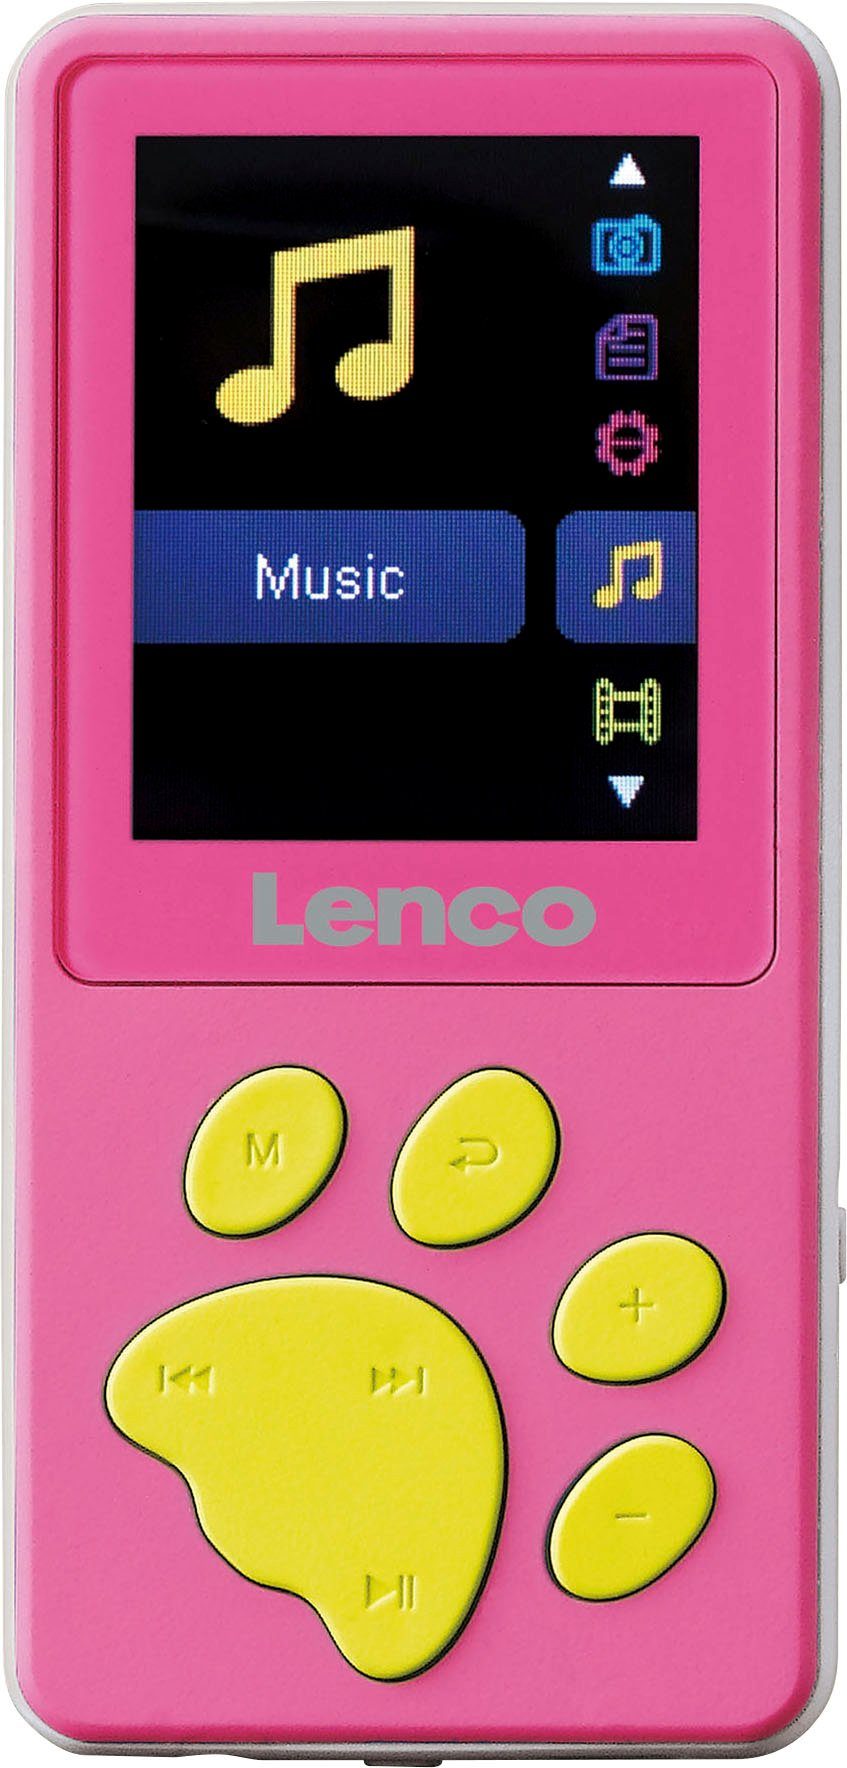 GB) MP4-Player (128 Lenco Pink MP3-Player Xemio-560